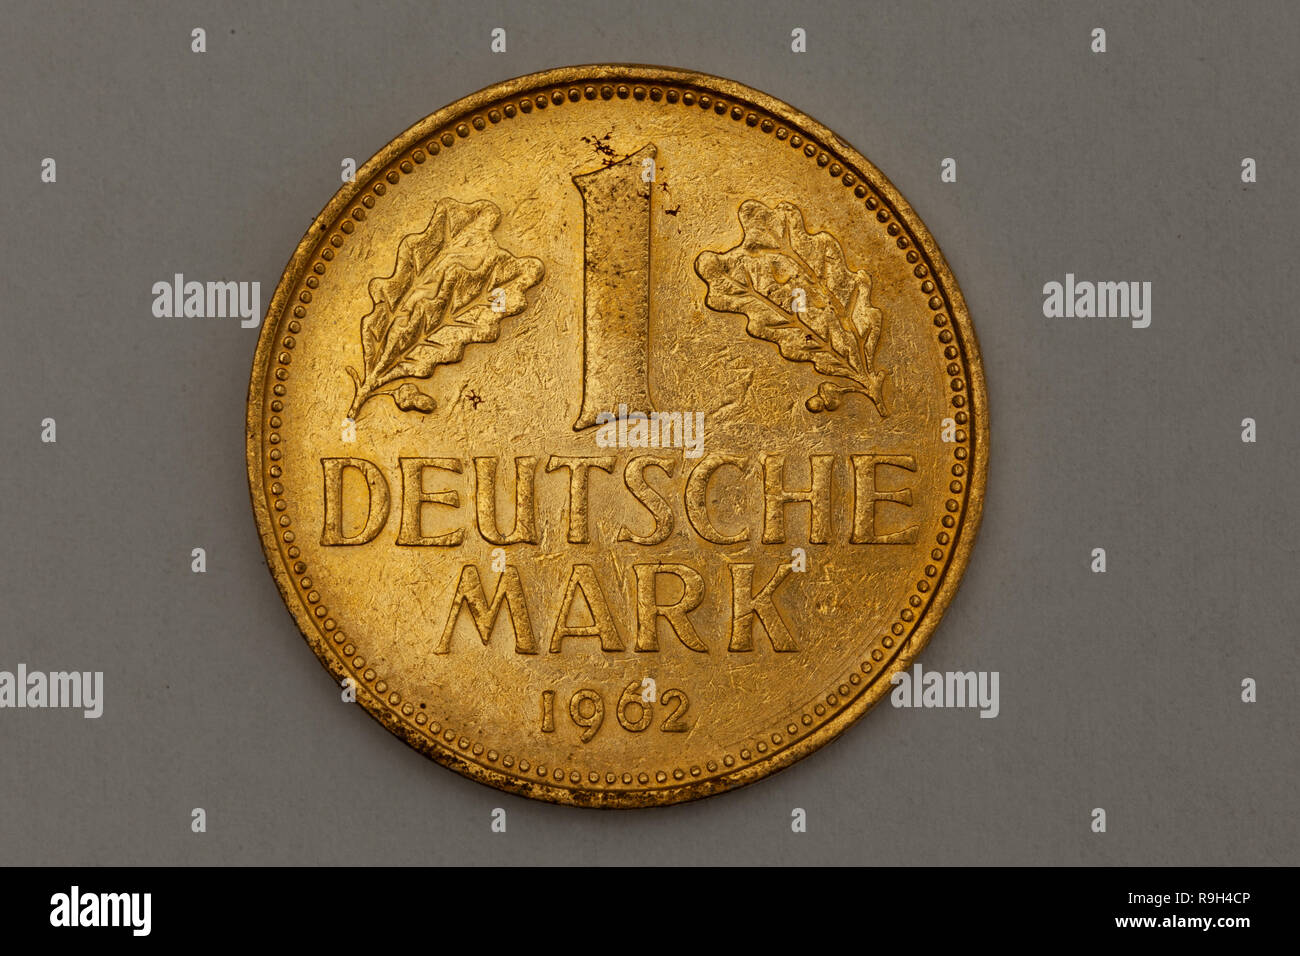 Goldmark - German Deutsche Mark Coin of 1962 Stock Photo